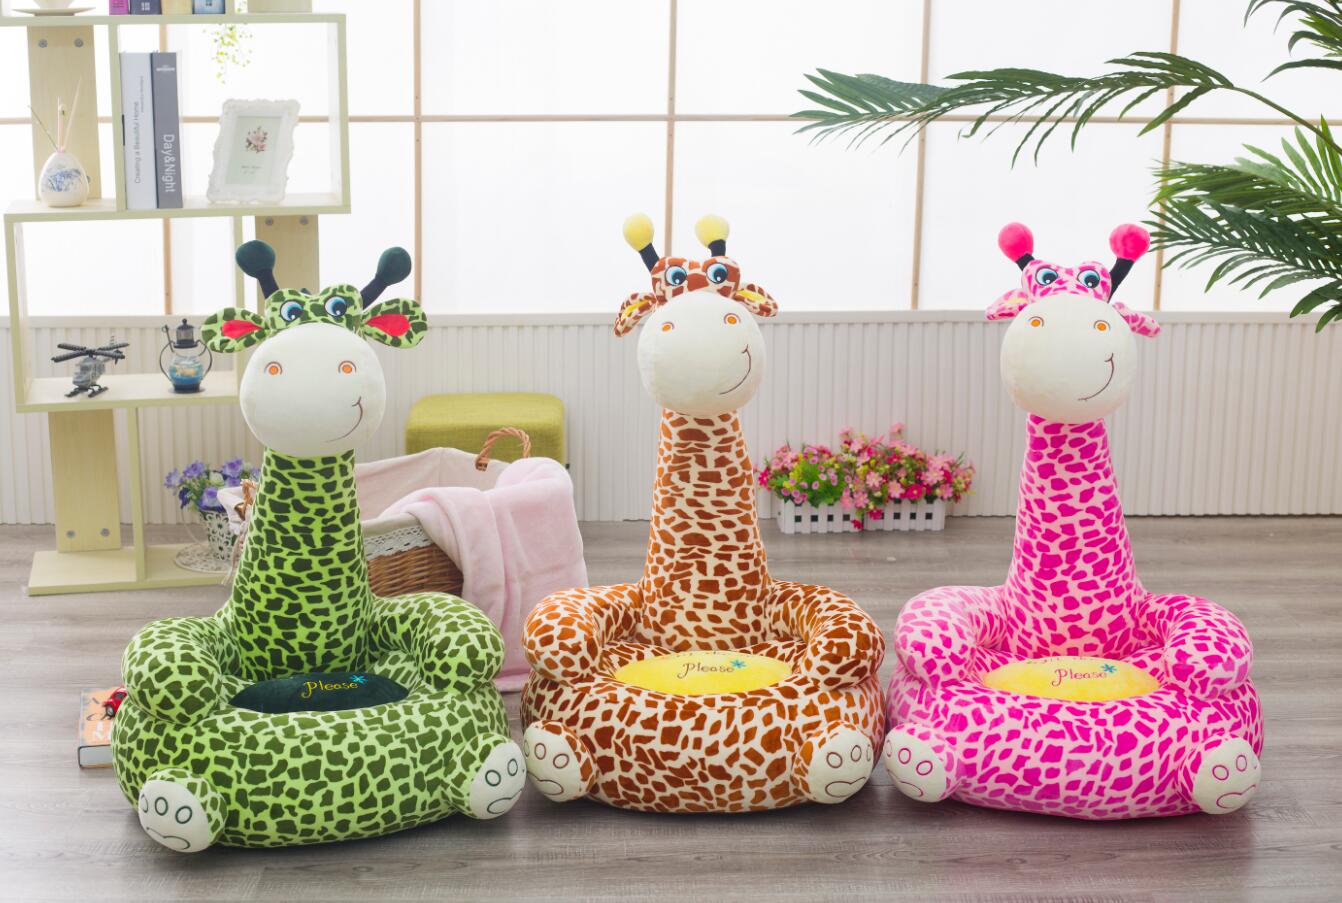 Hot sales plush baby animal sofa chair giraffe shaped sofa chairs soft stuffed